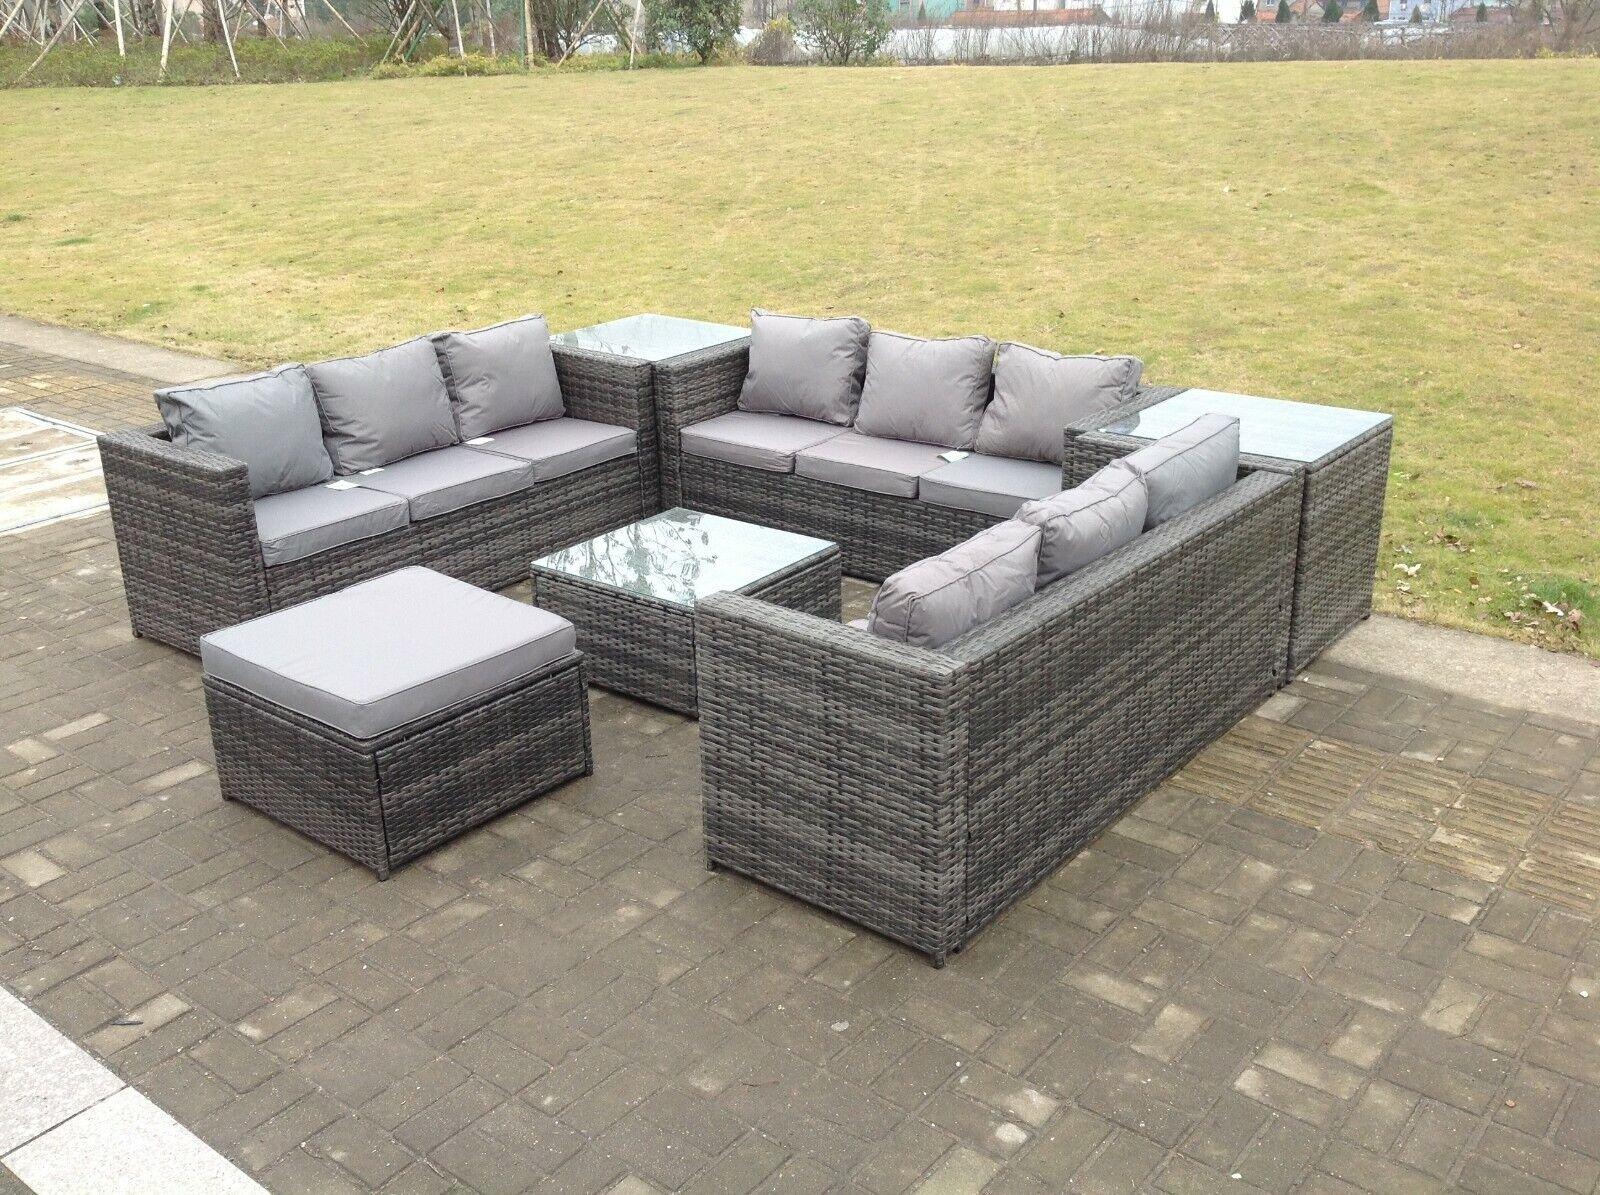 10 Seater U Shape Rattan Sofa Set Outdoor Garden Furniture Patio With 3 Table